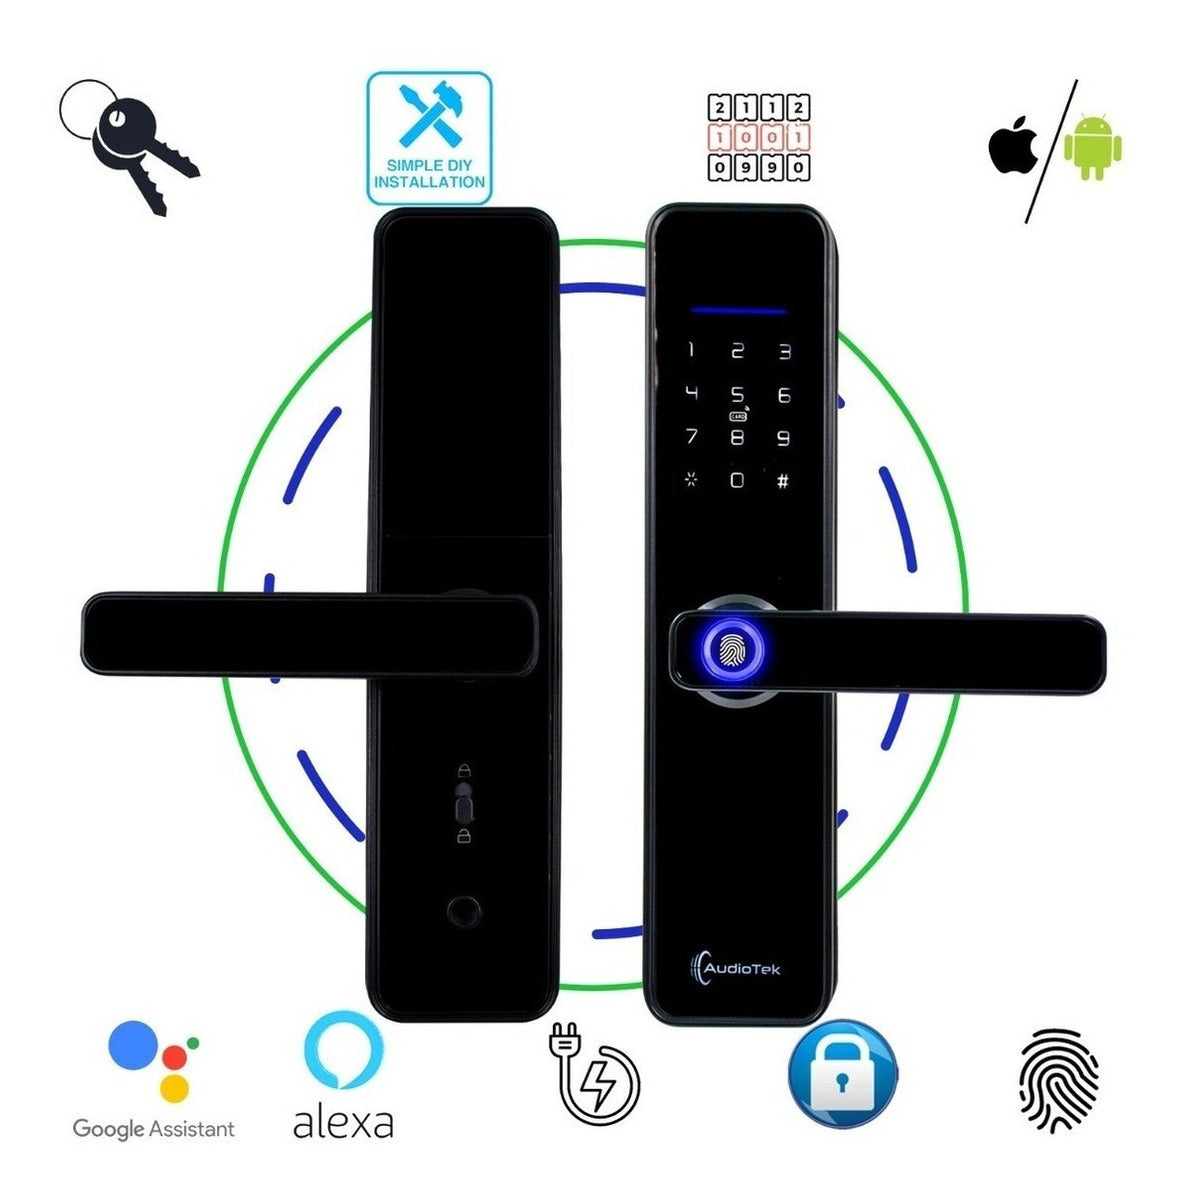 Cerradura Wifi Chapa Digital Inteligente App Seguridad – Pro System Audiotek